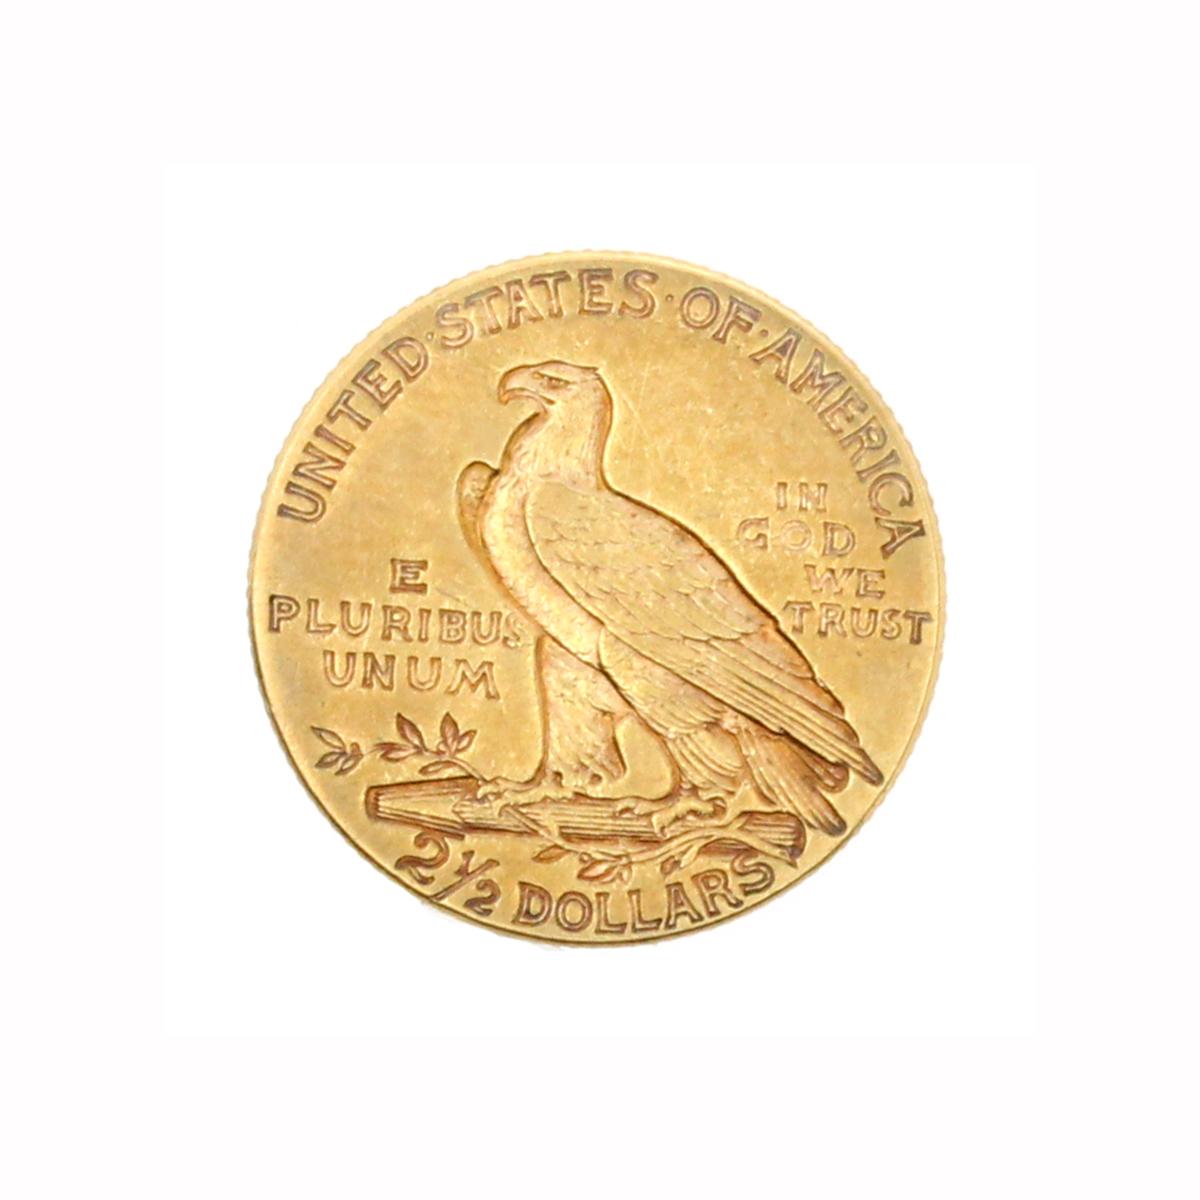 Rare 1915 $2.50 U.S. Indian Head Gold Coin